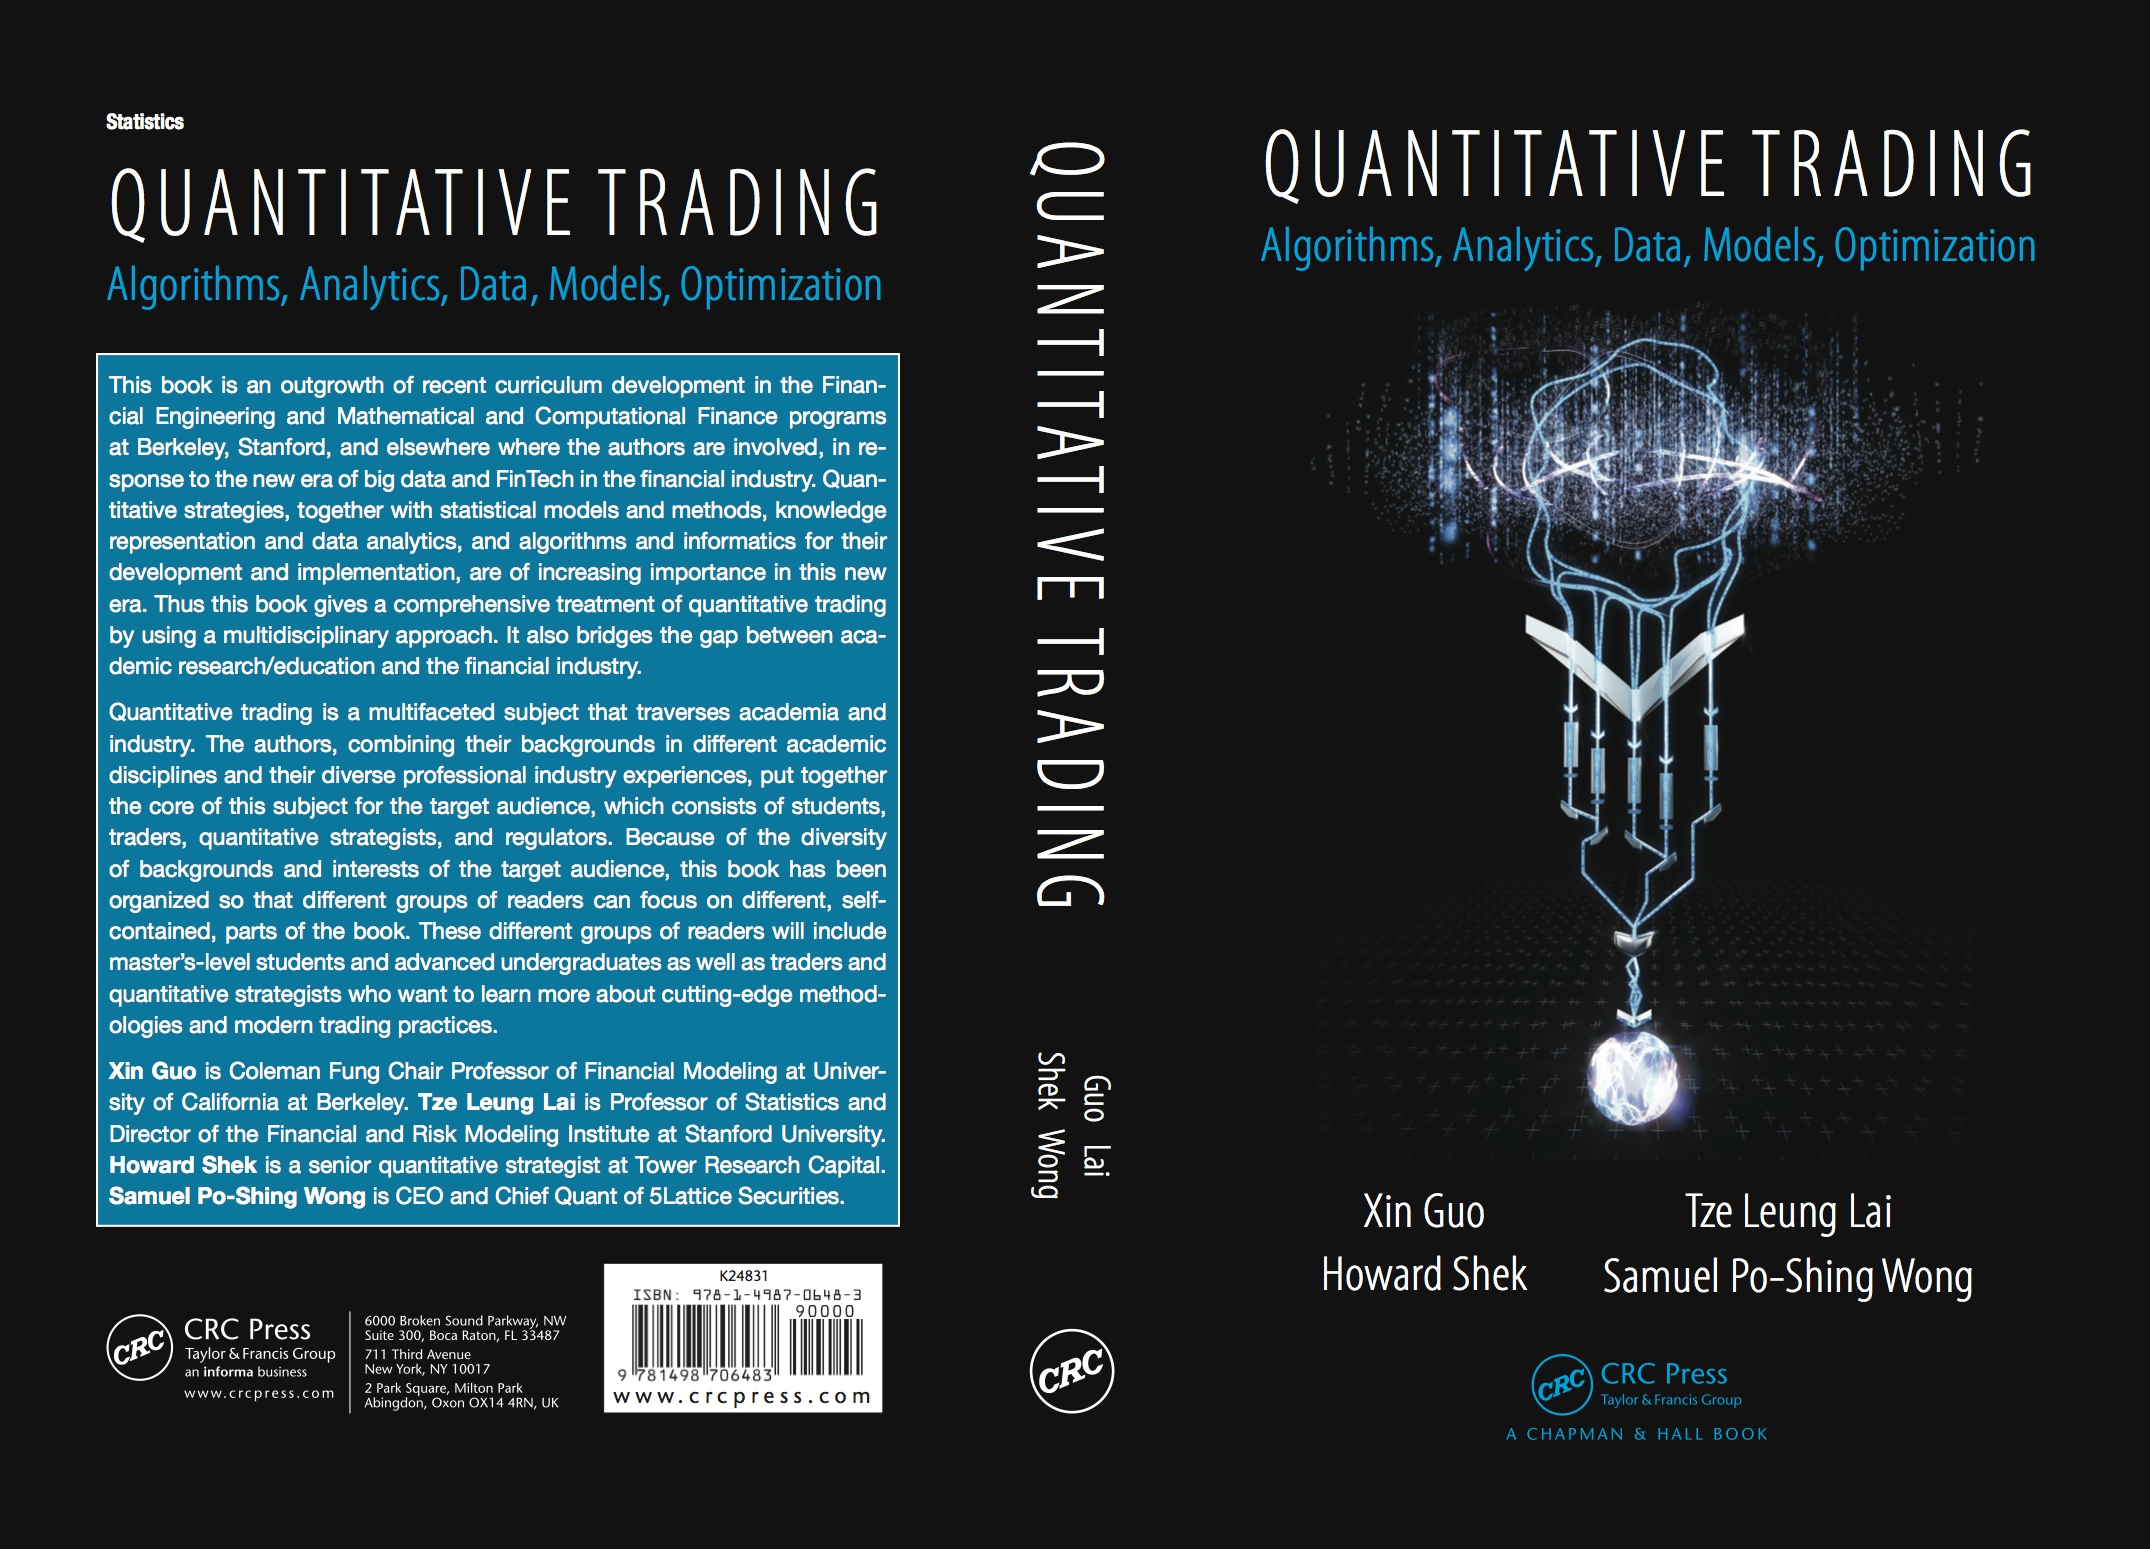 Quantitative Trading: Guo, Lai, Shek and Wong